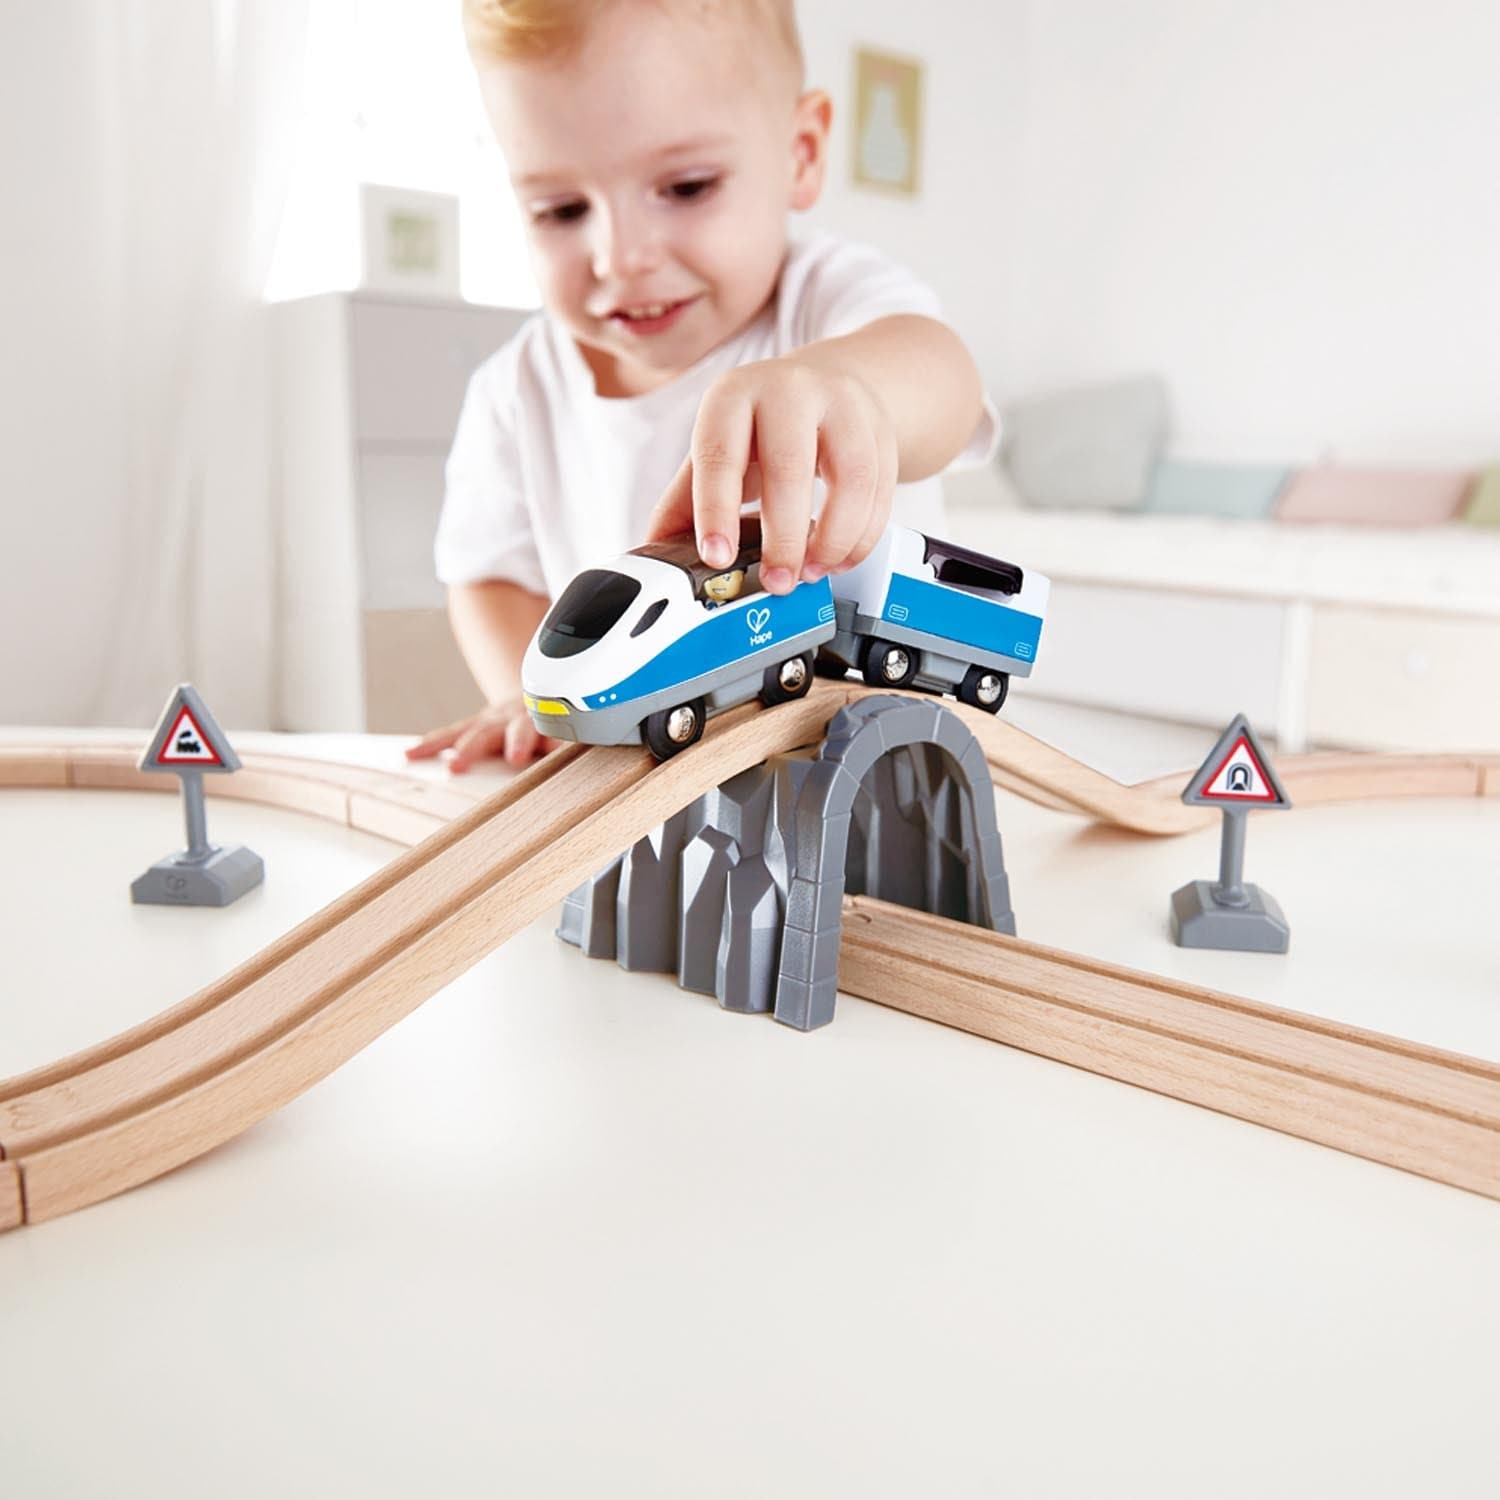 Hape-Passenger Train Set-E3729-Legacy Toys